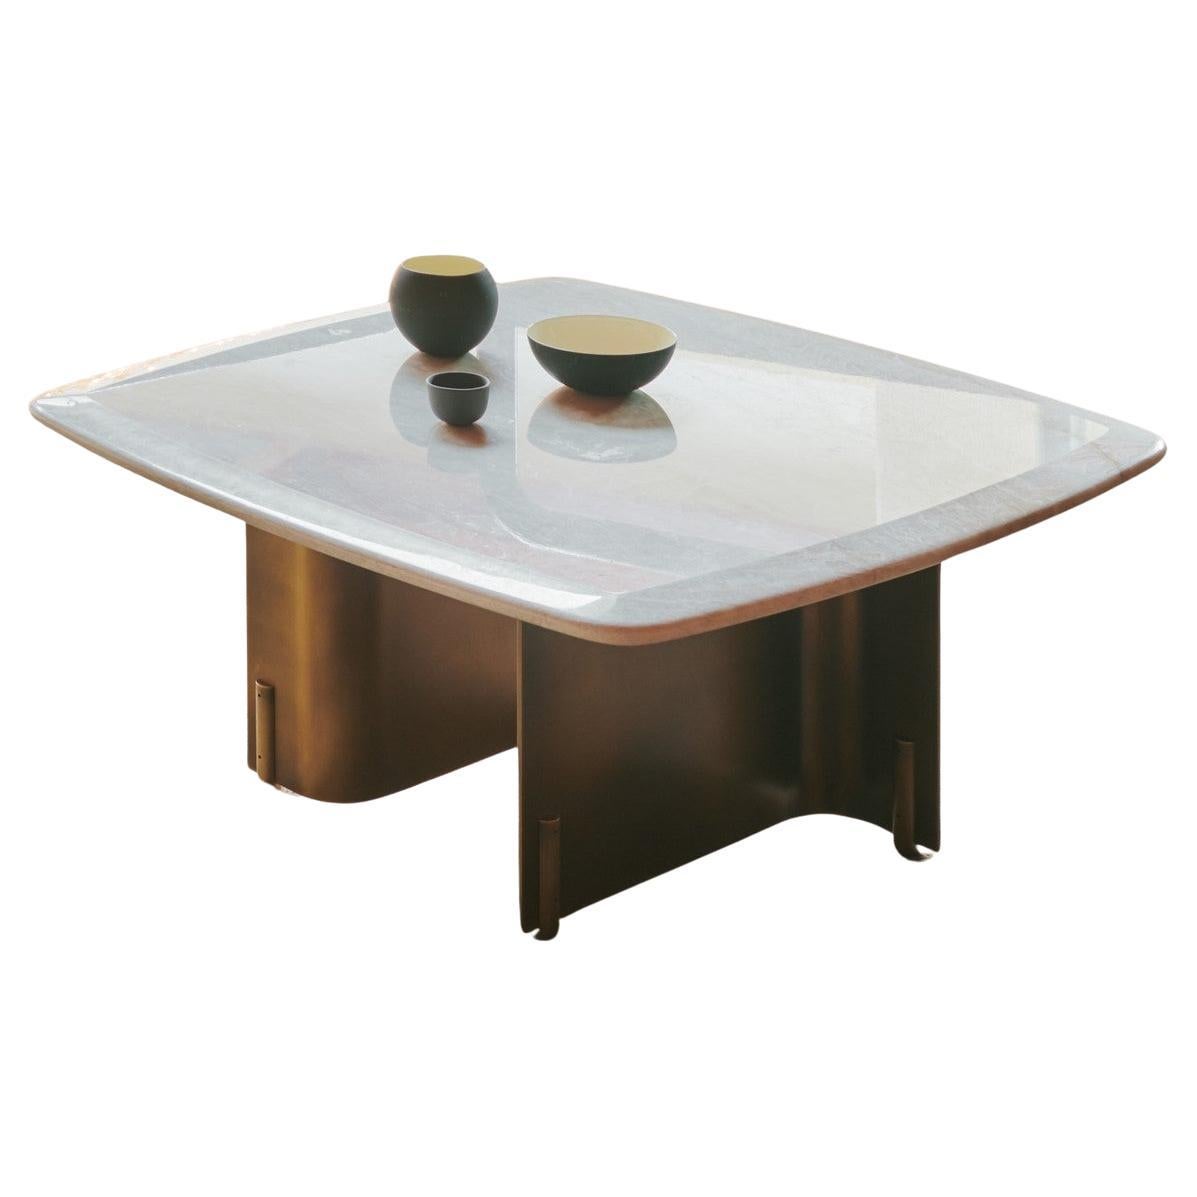 Hidde's Coffee Table - 55 "Fiftyfive"-  Italian Marble & Brass Legs 900x900 mm  For Sale